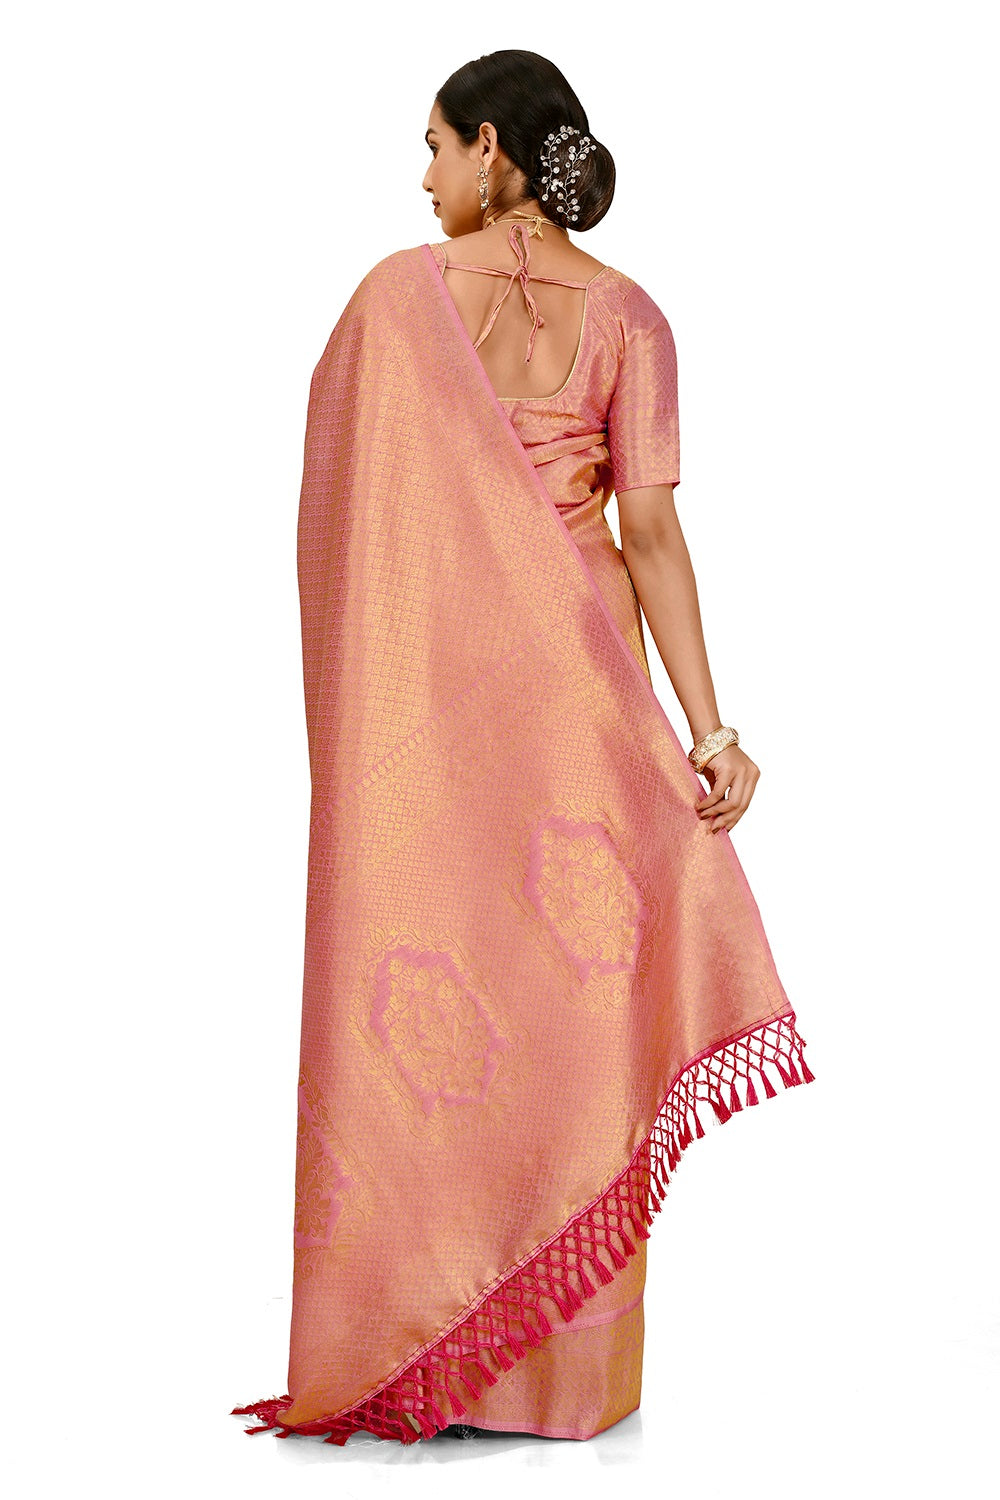 35 Stunning Silk Saree Blouse Designs - Check this Updated List